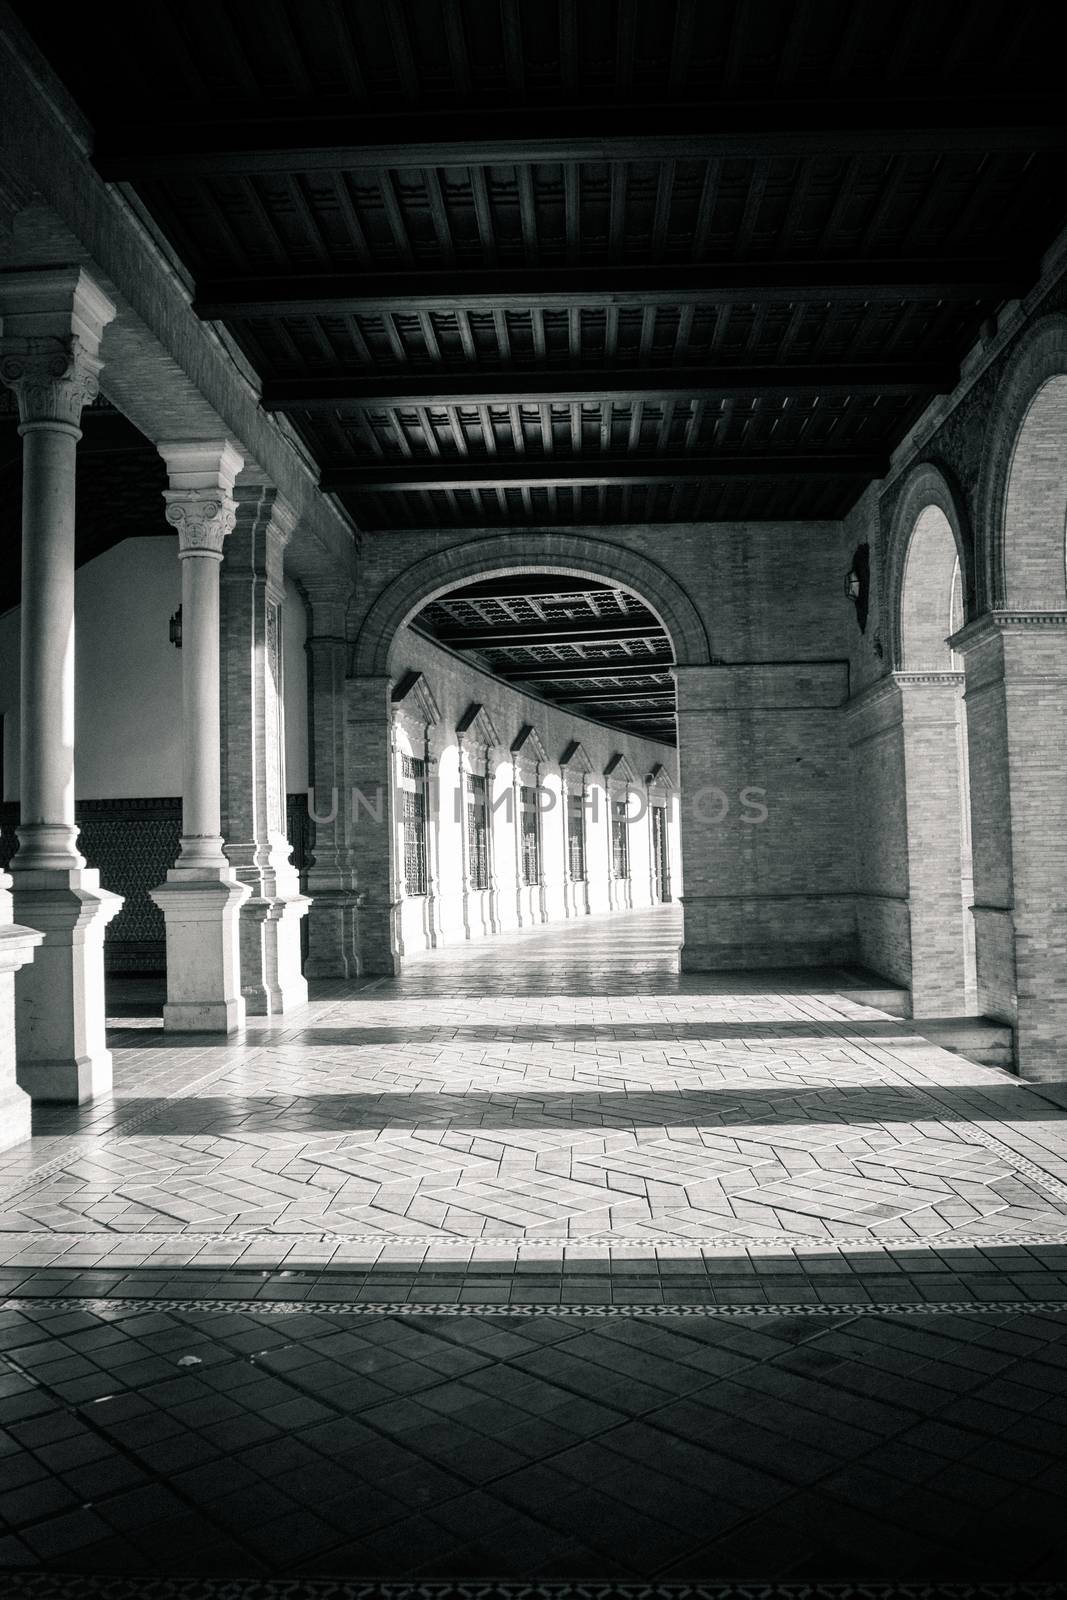 Corridors and pillars in Plaza de Espana in Seville, Spain, Euro by ramana16